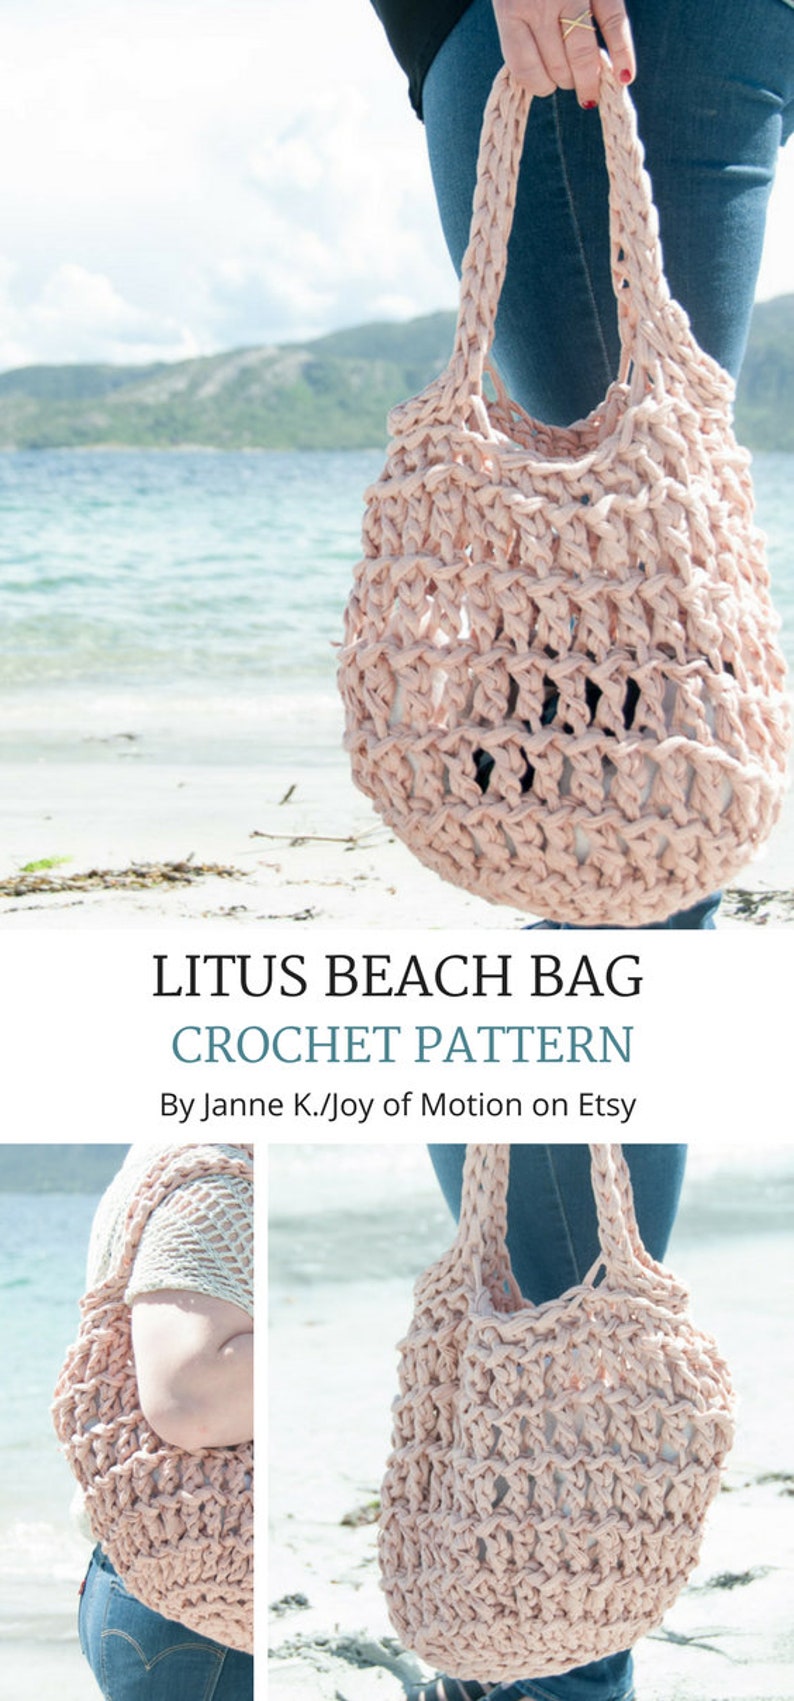 Crochet Bag Pattern Crochet Beach Bag Pattern Crochet Purse Bag Pattern Crochet Tote Bag Crochet Tote Crochet Shoulder Bag image 10